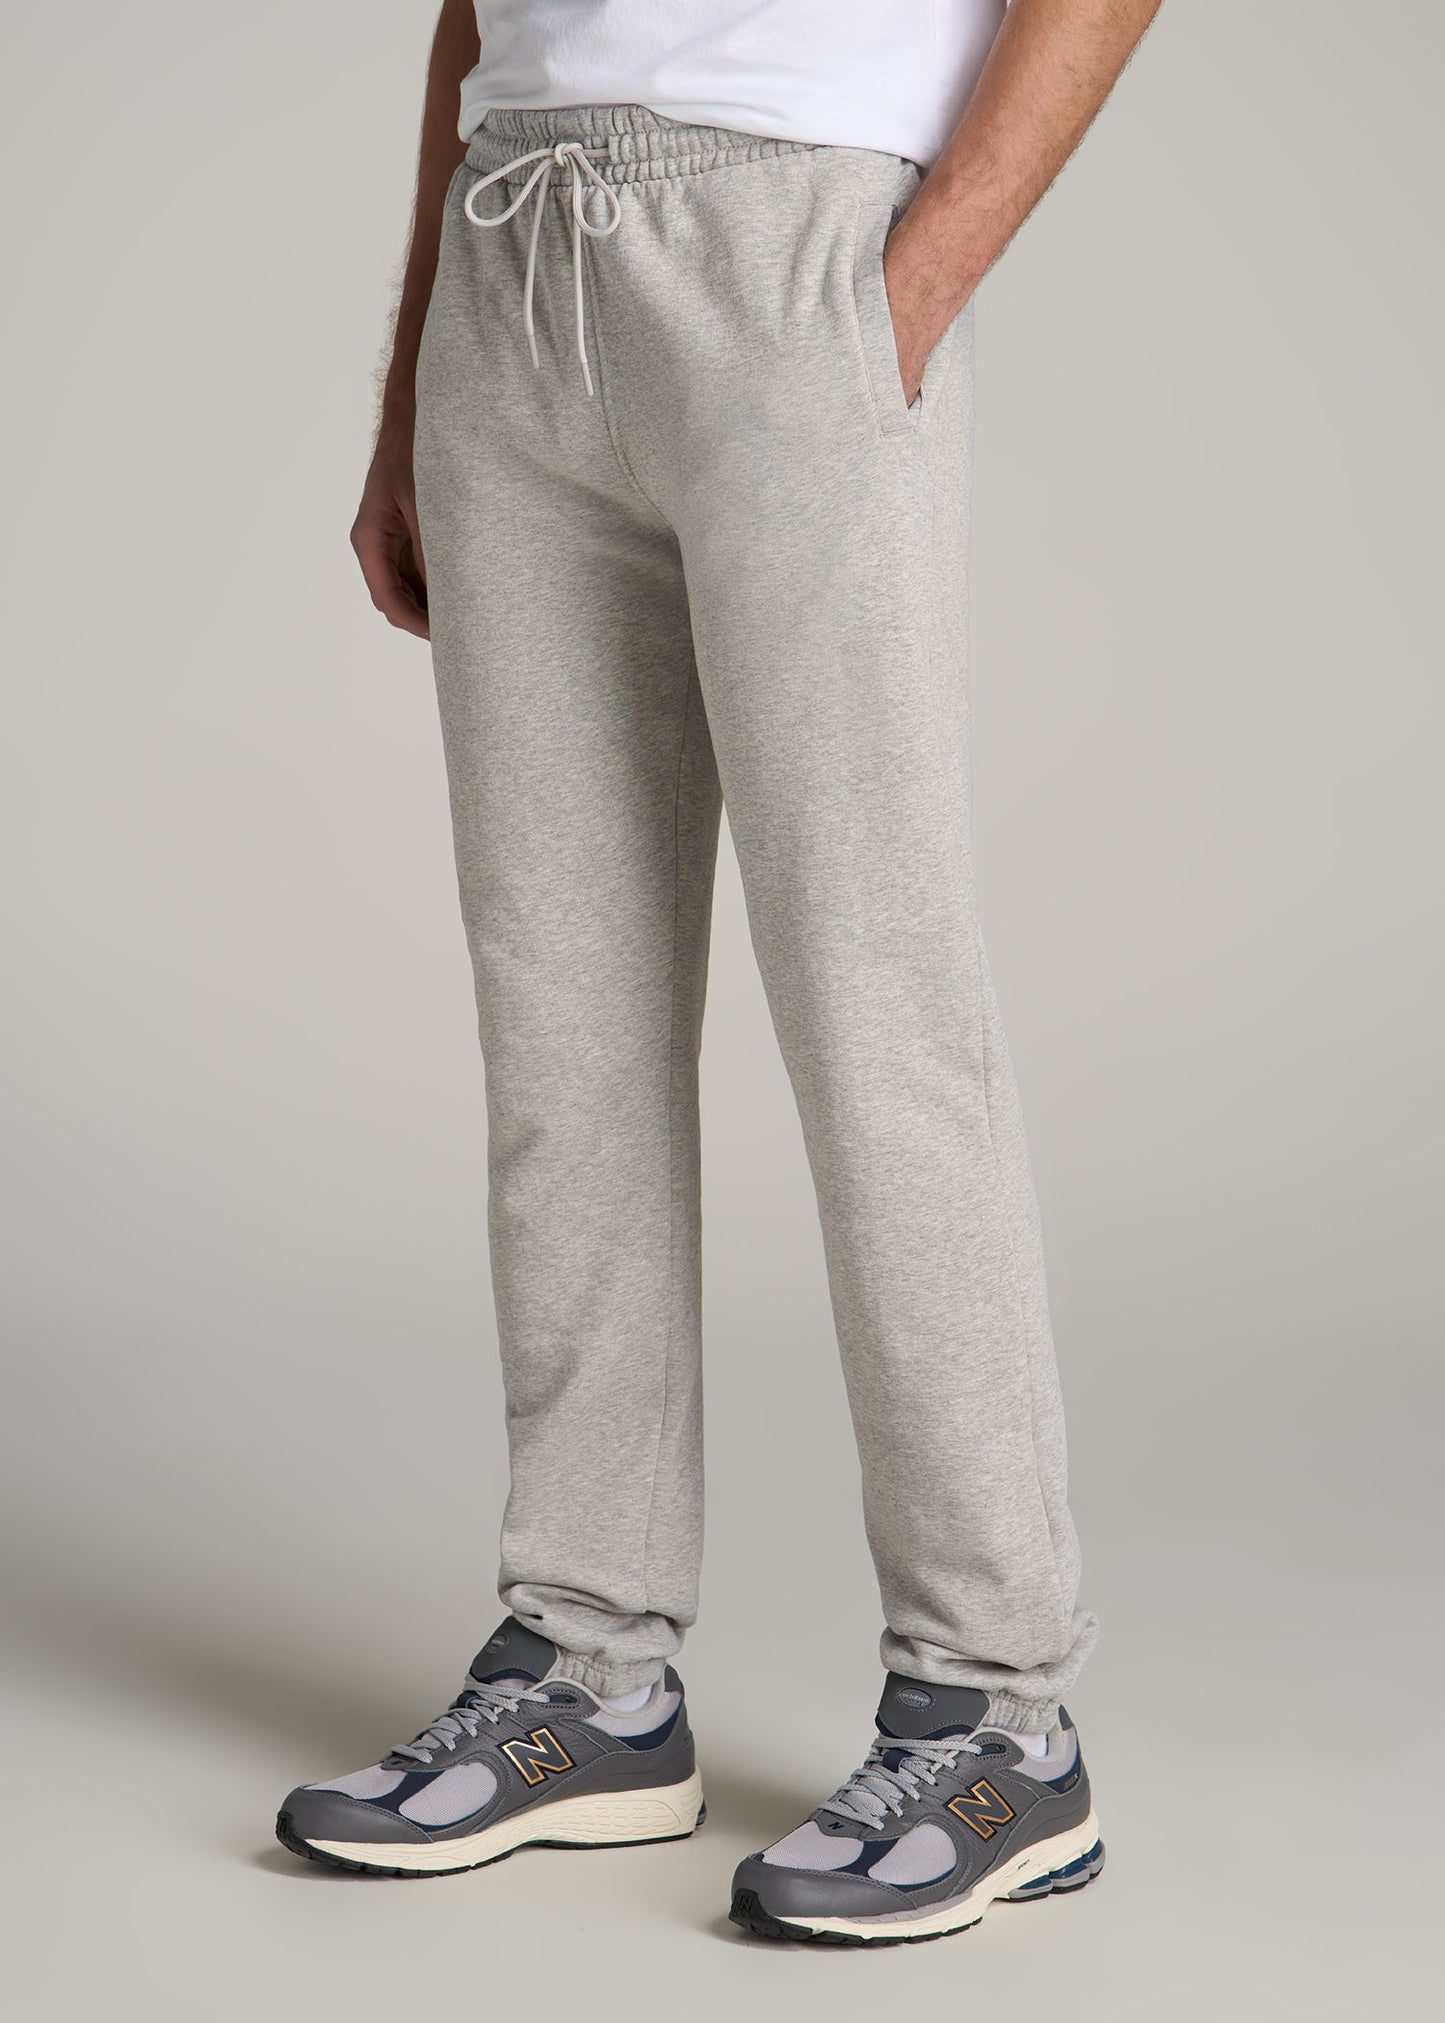 A tall man wearing American Tall's Wearever Fleece Elastic-Bottom Sweatpants for Tall Men in Grey Mix.